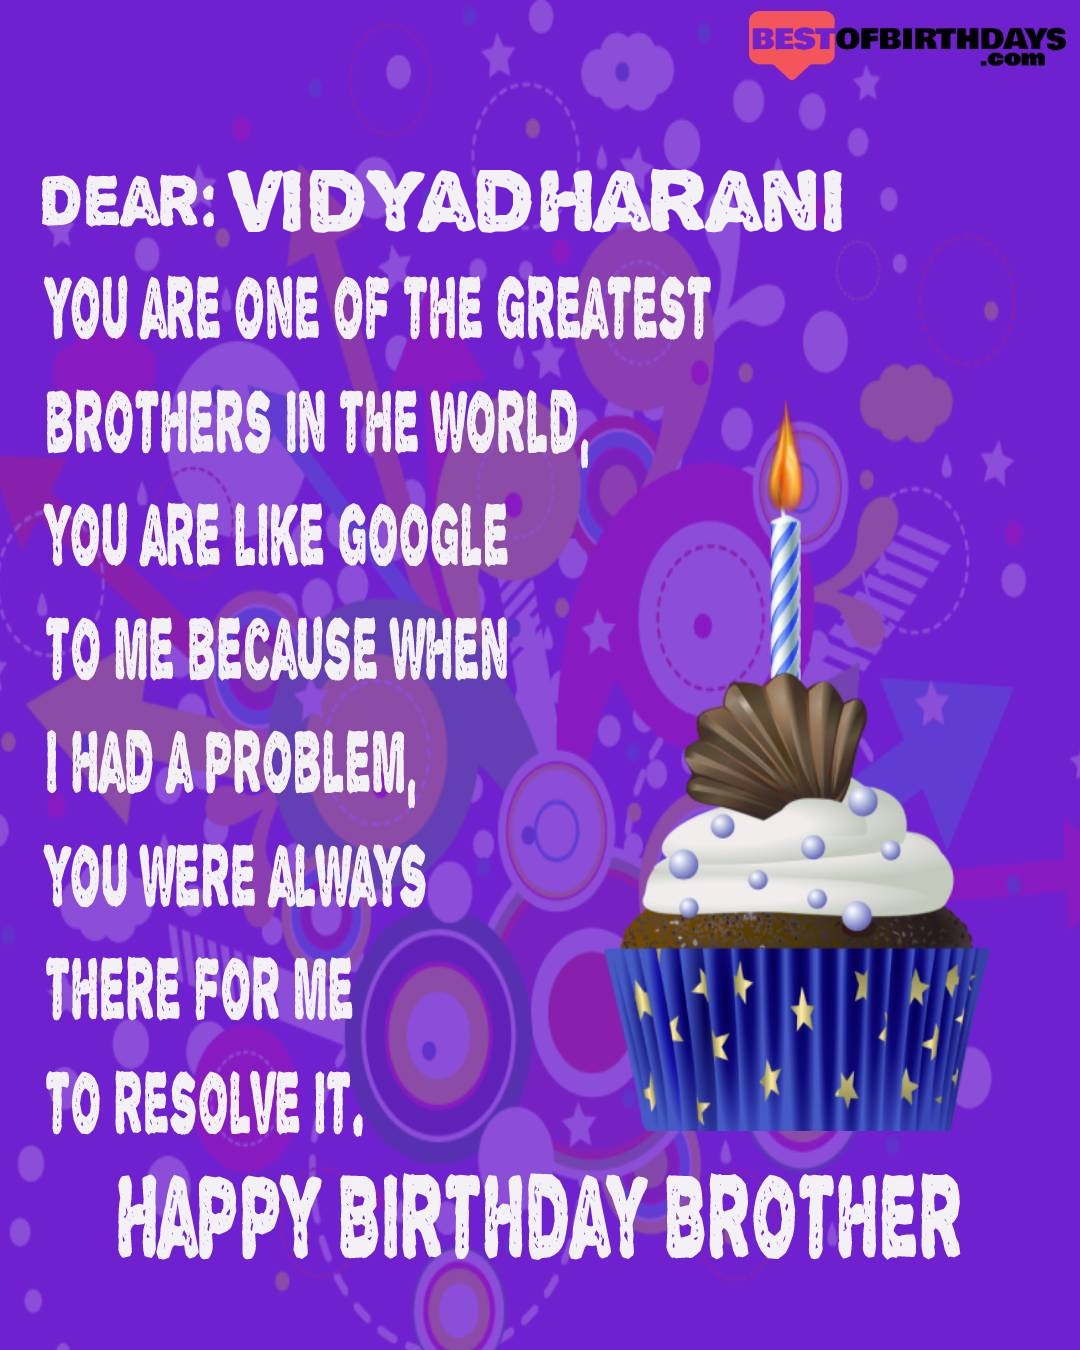 Happy birthday vidyadharani bhai brother bro